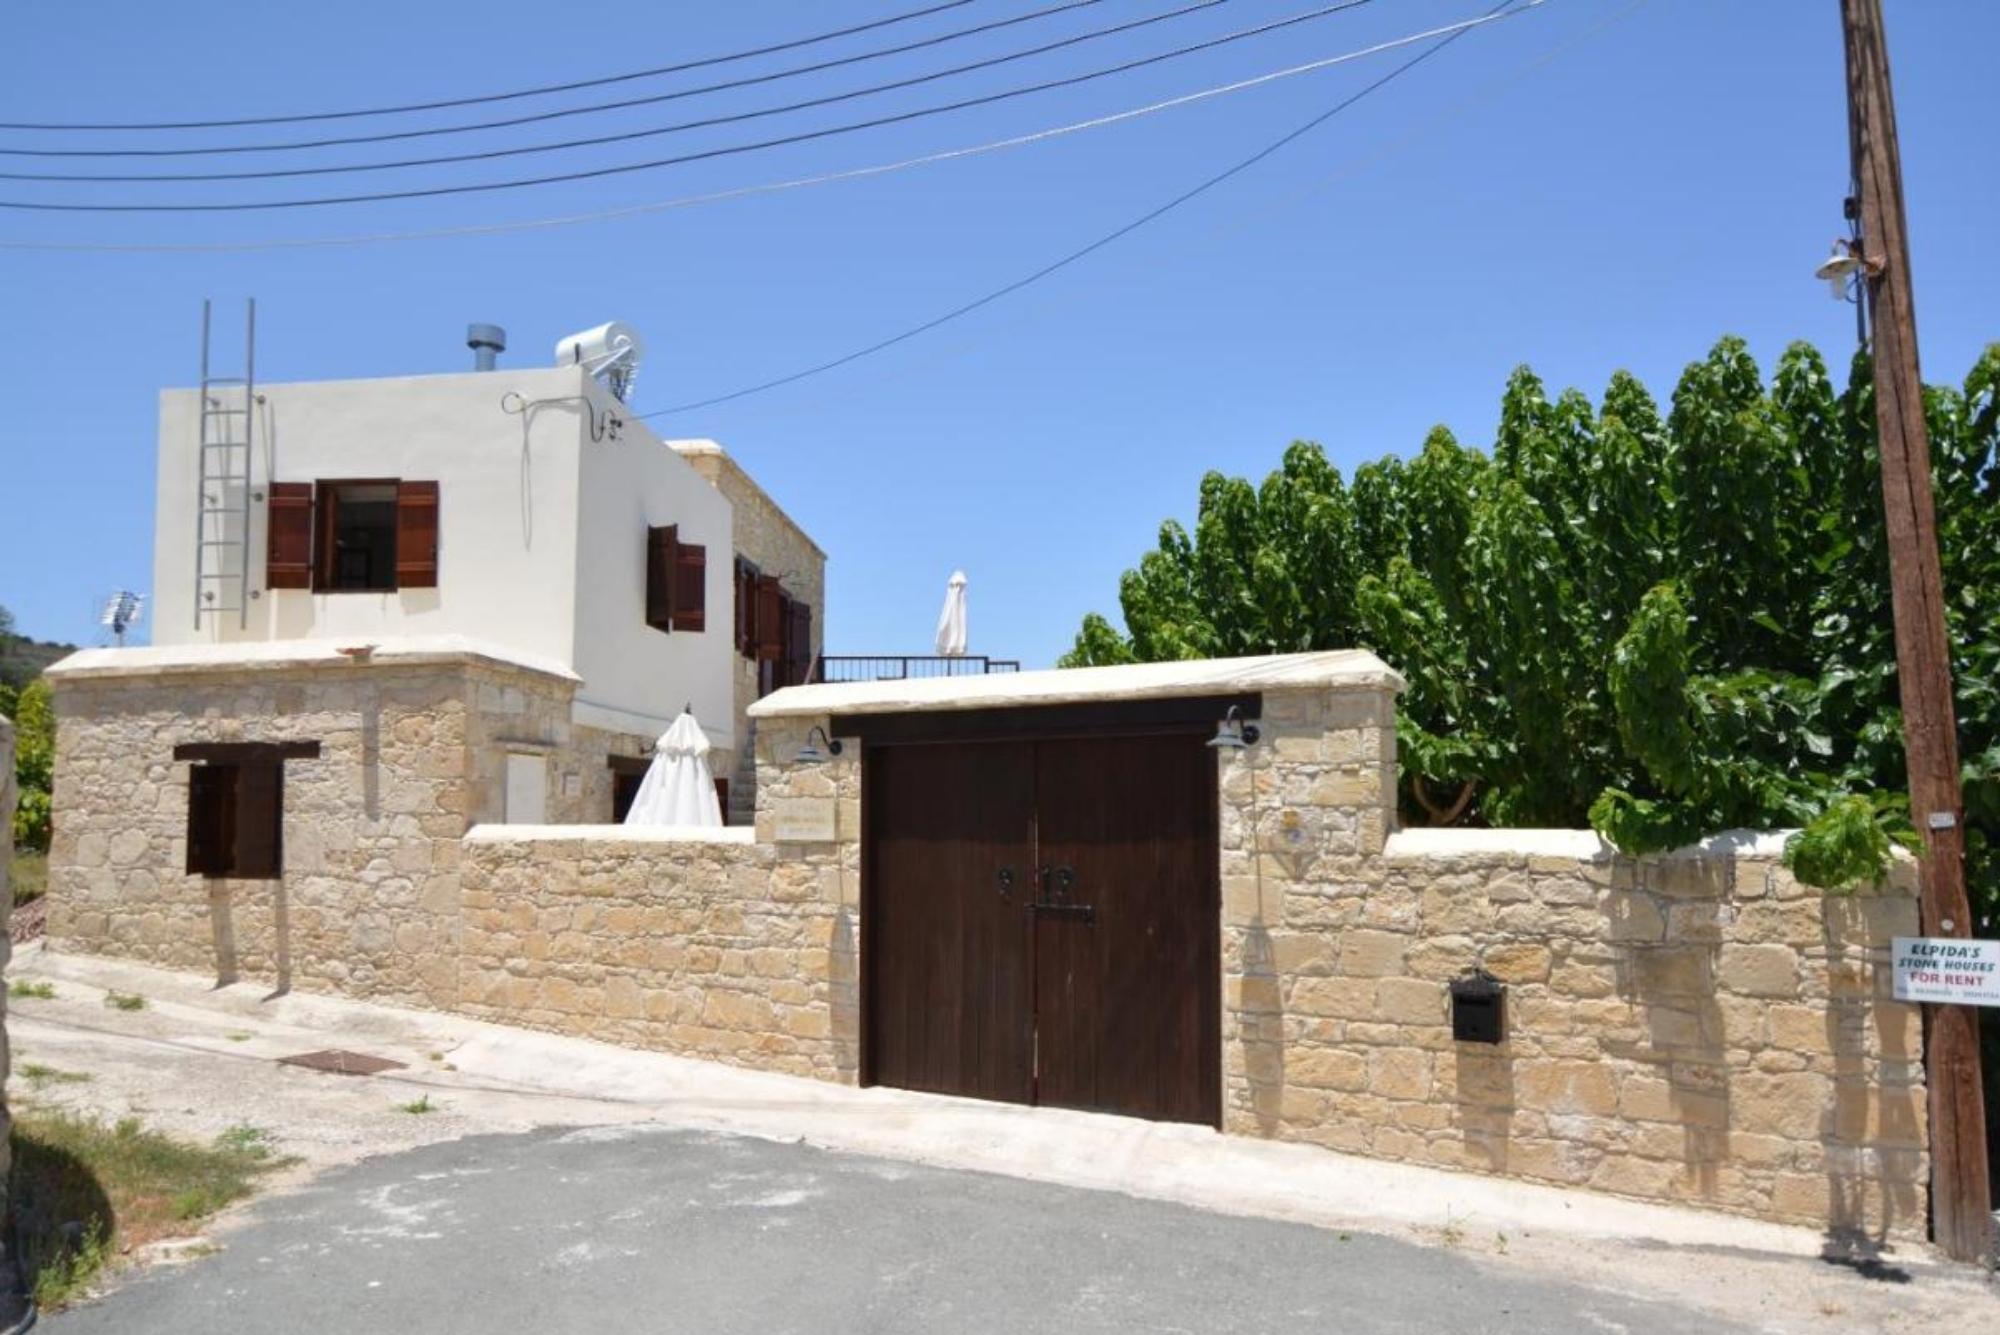 Elpida's Stone Houses in Cyprus